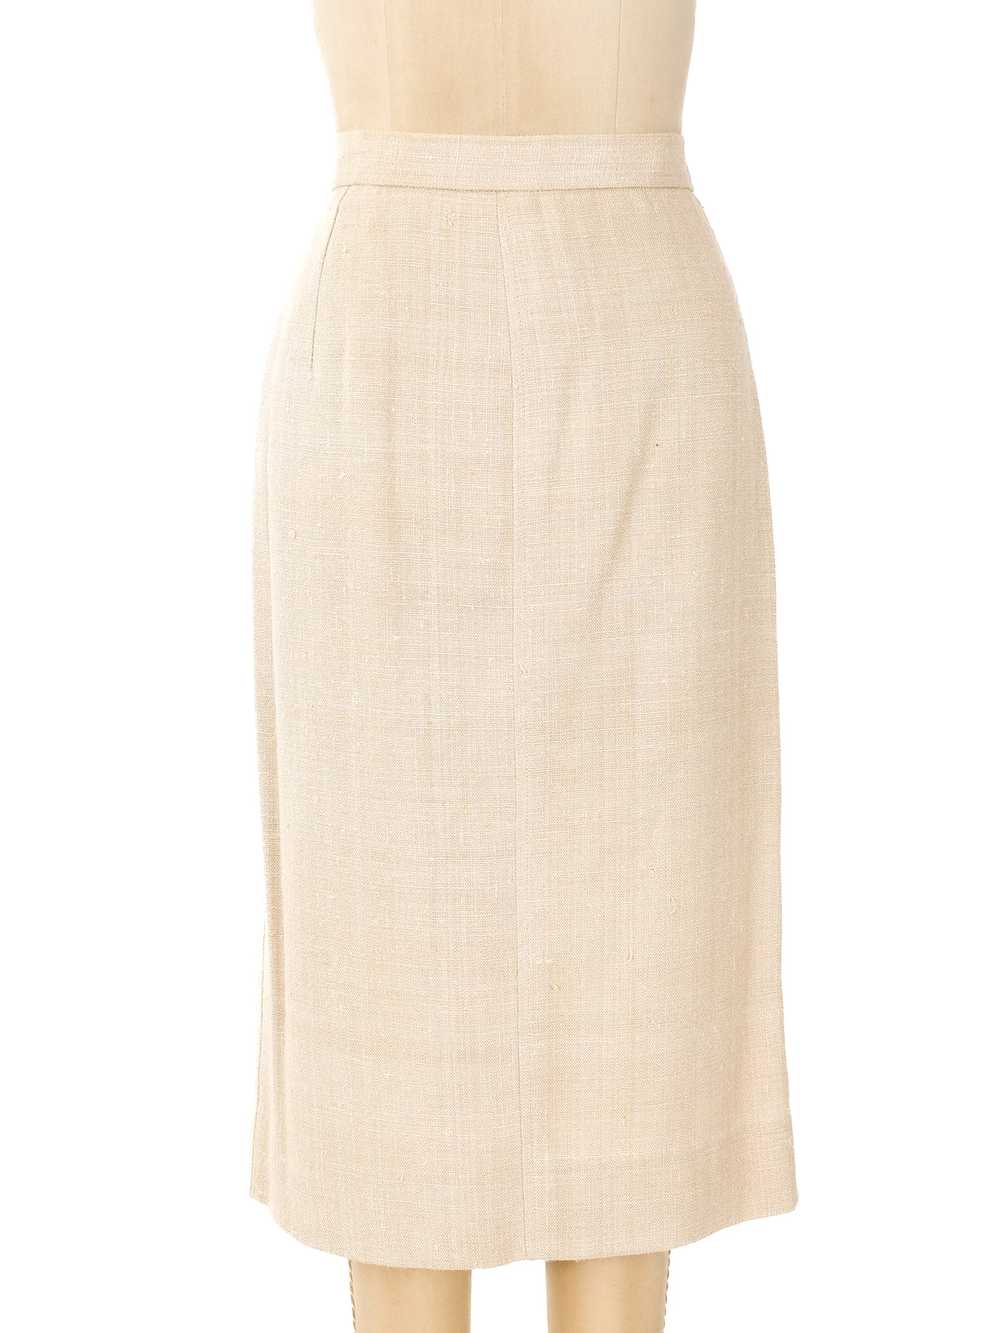 Yves Saint Laurent Natural Silk Skirt Suit - image 7